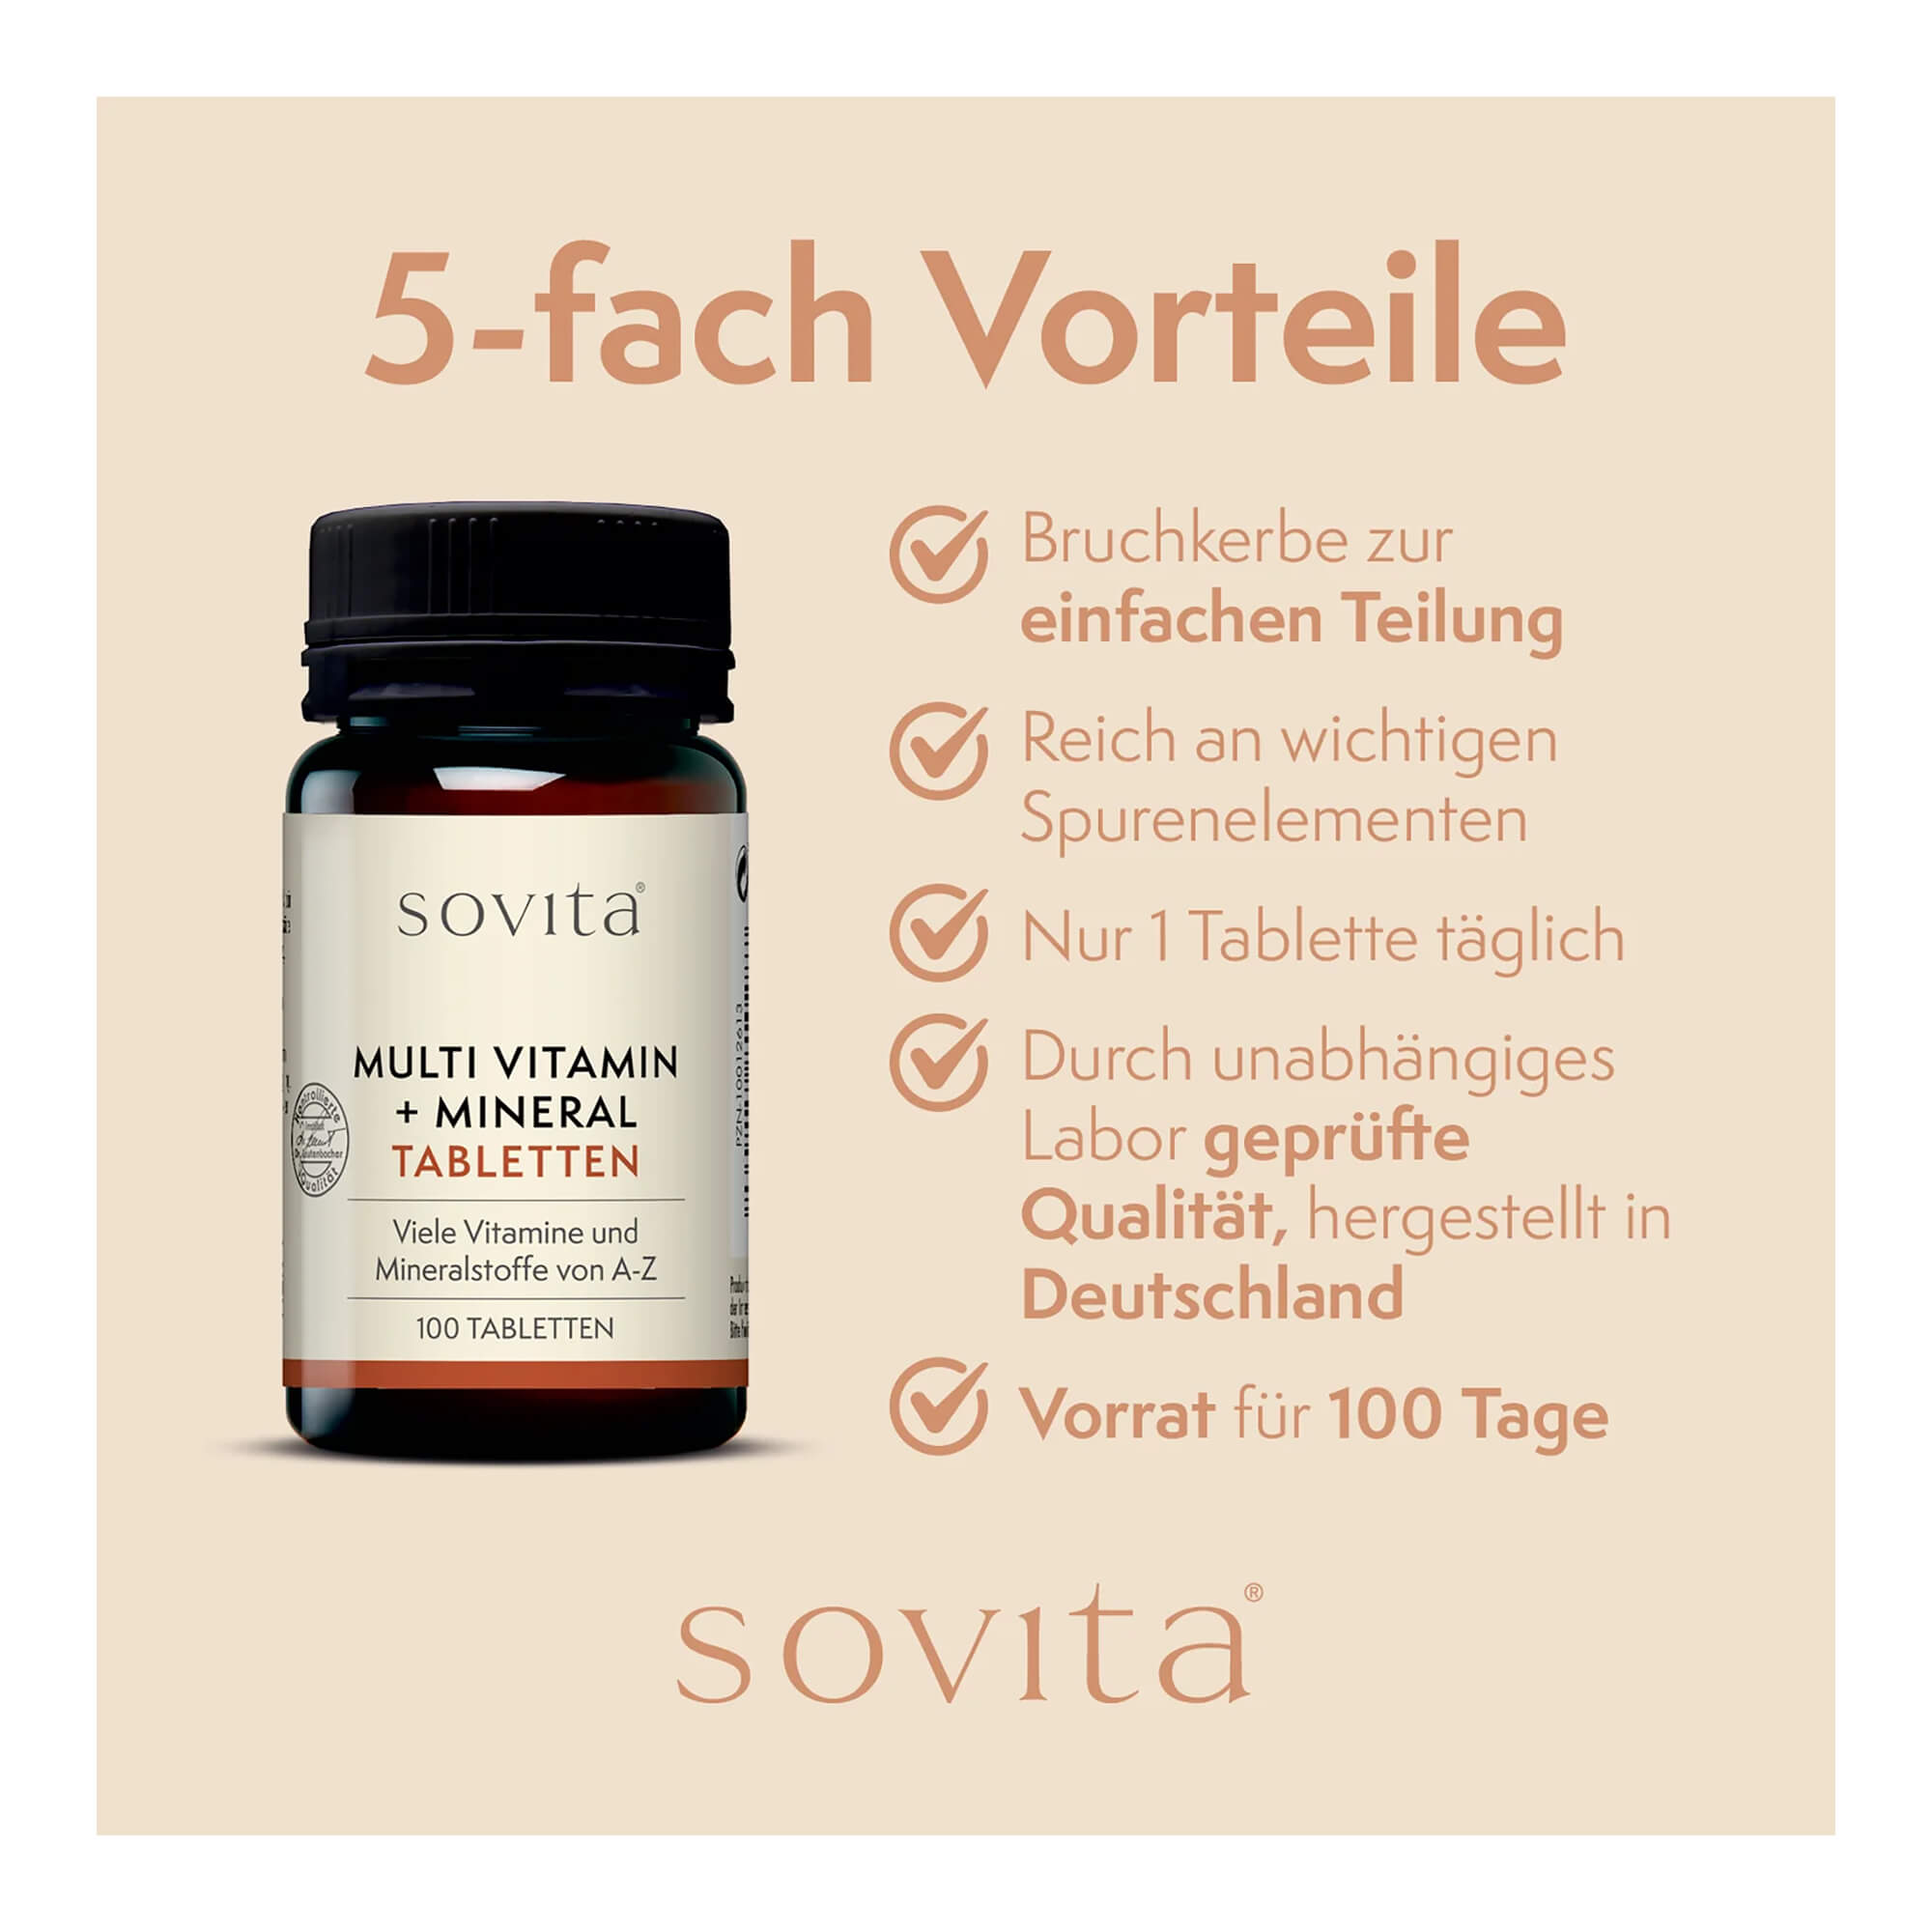 Grafik Sovita Multi Vitamin+Mineral Tabletten Vorteile